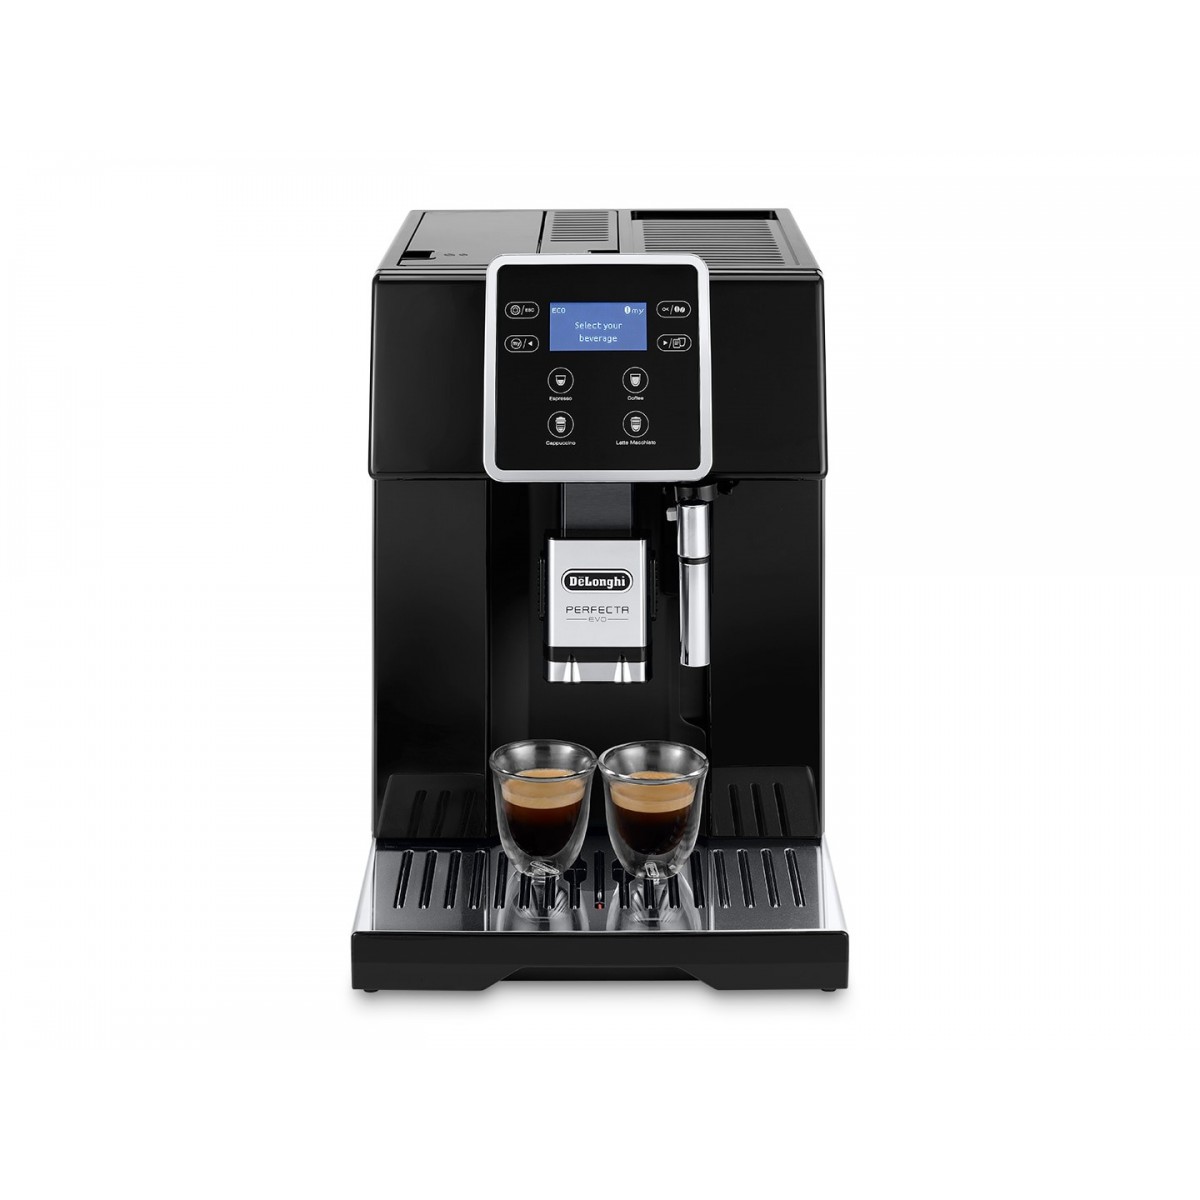 De Longhi Perfecta ESAM420.40.B - Combi coffee maker - Coffee beans - Built-in grinder - 1350 W - Black